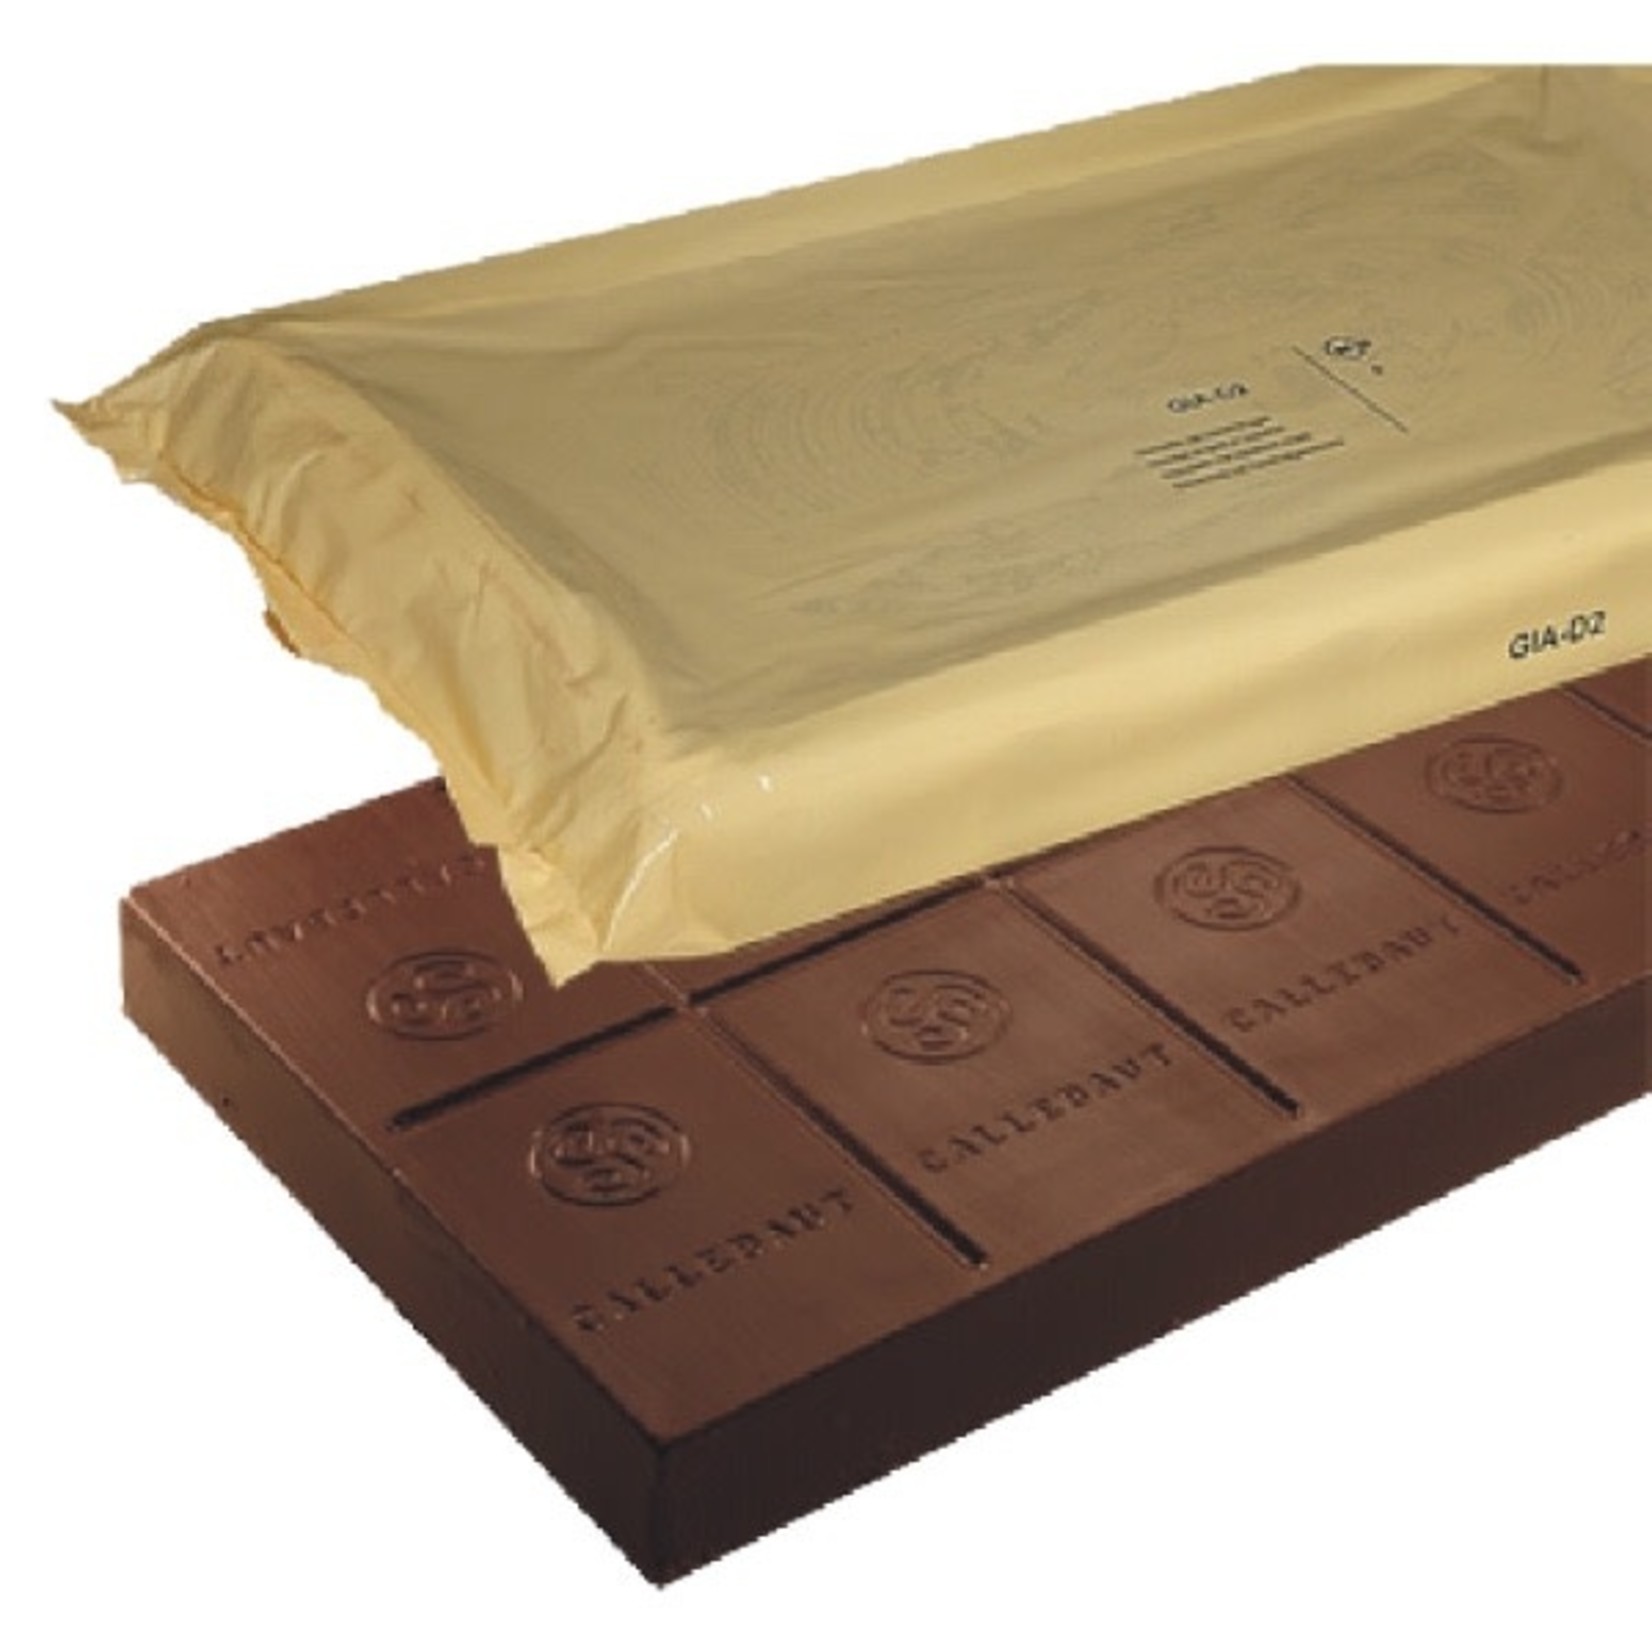 Barry Callebaut Barry Callebaut - Dark Chocolate Hazelnut Gianduja 30% - 5.5kg/11 lb, GIA-D2-144 (box of 5)